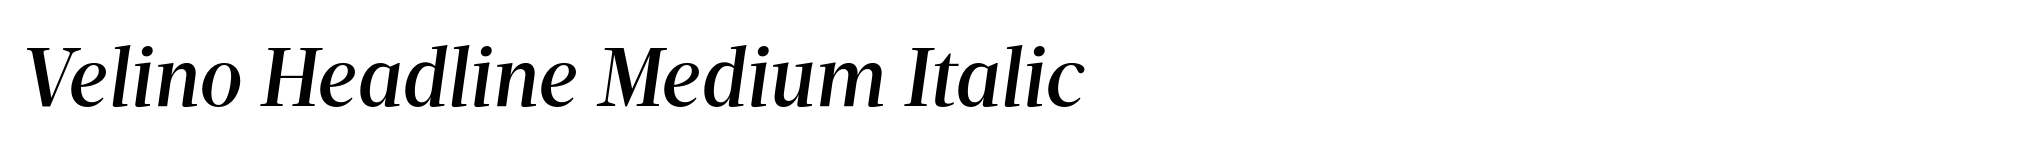 Velino Headline Medium Italic image